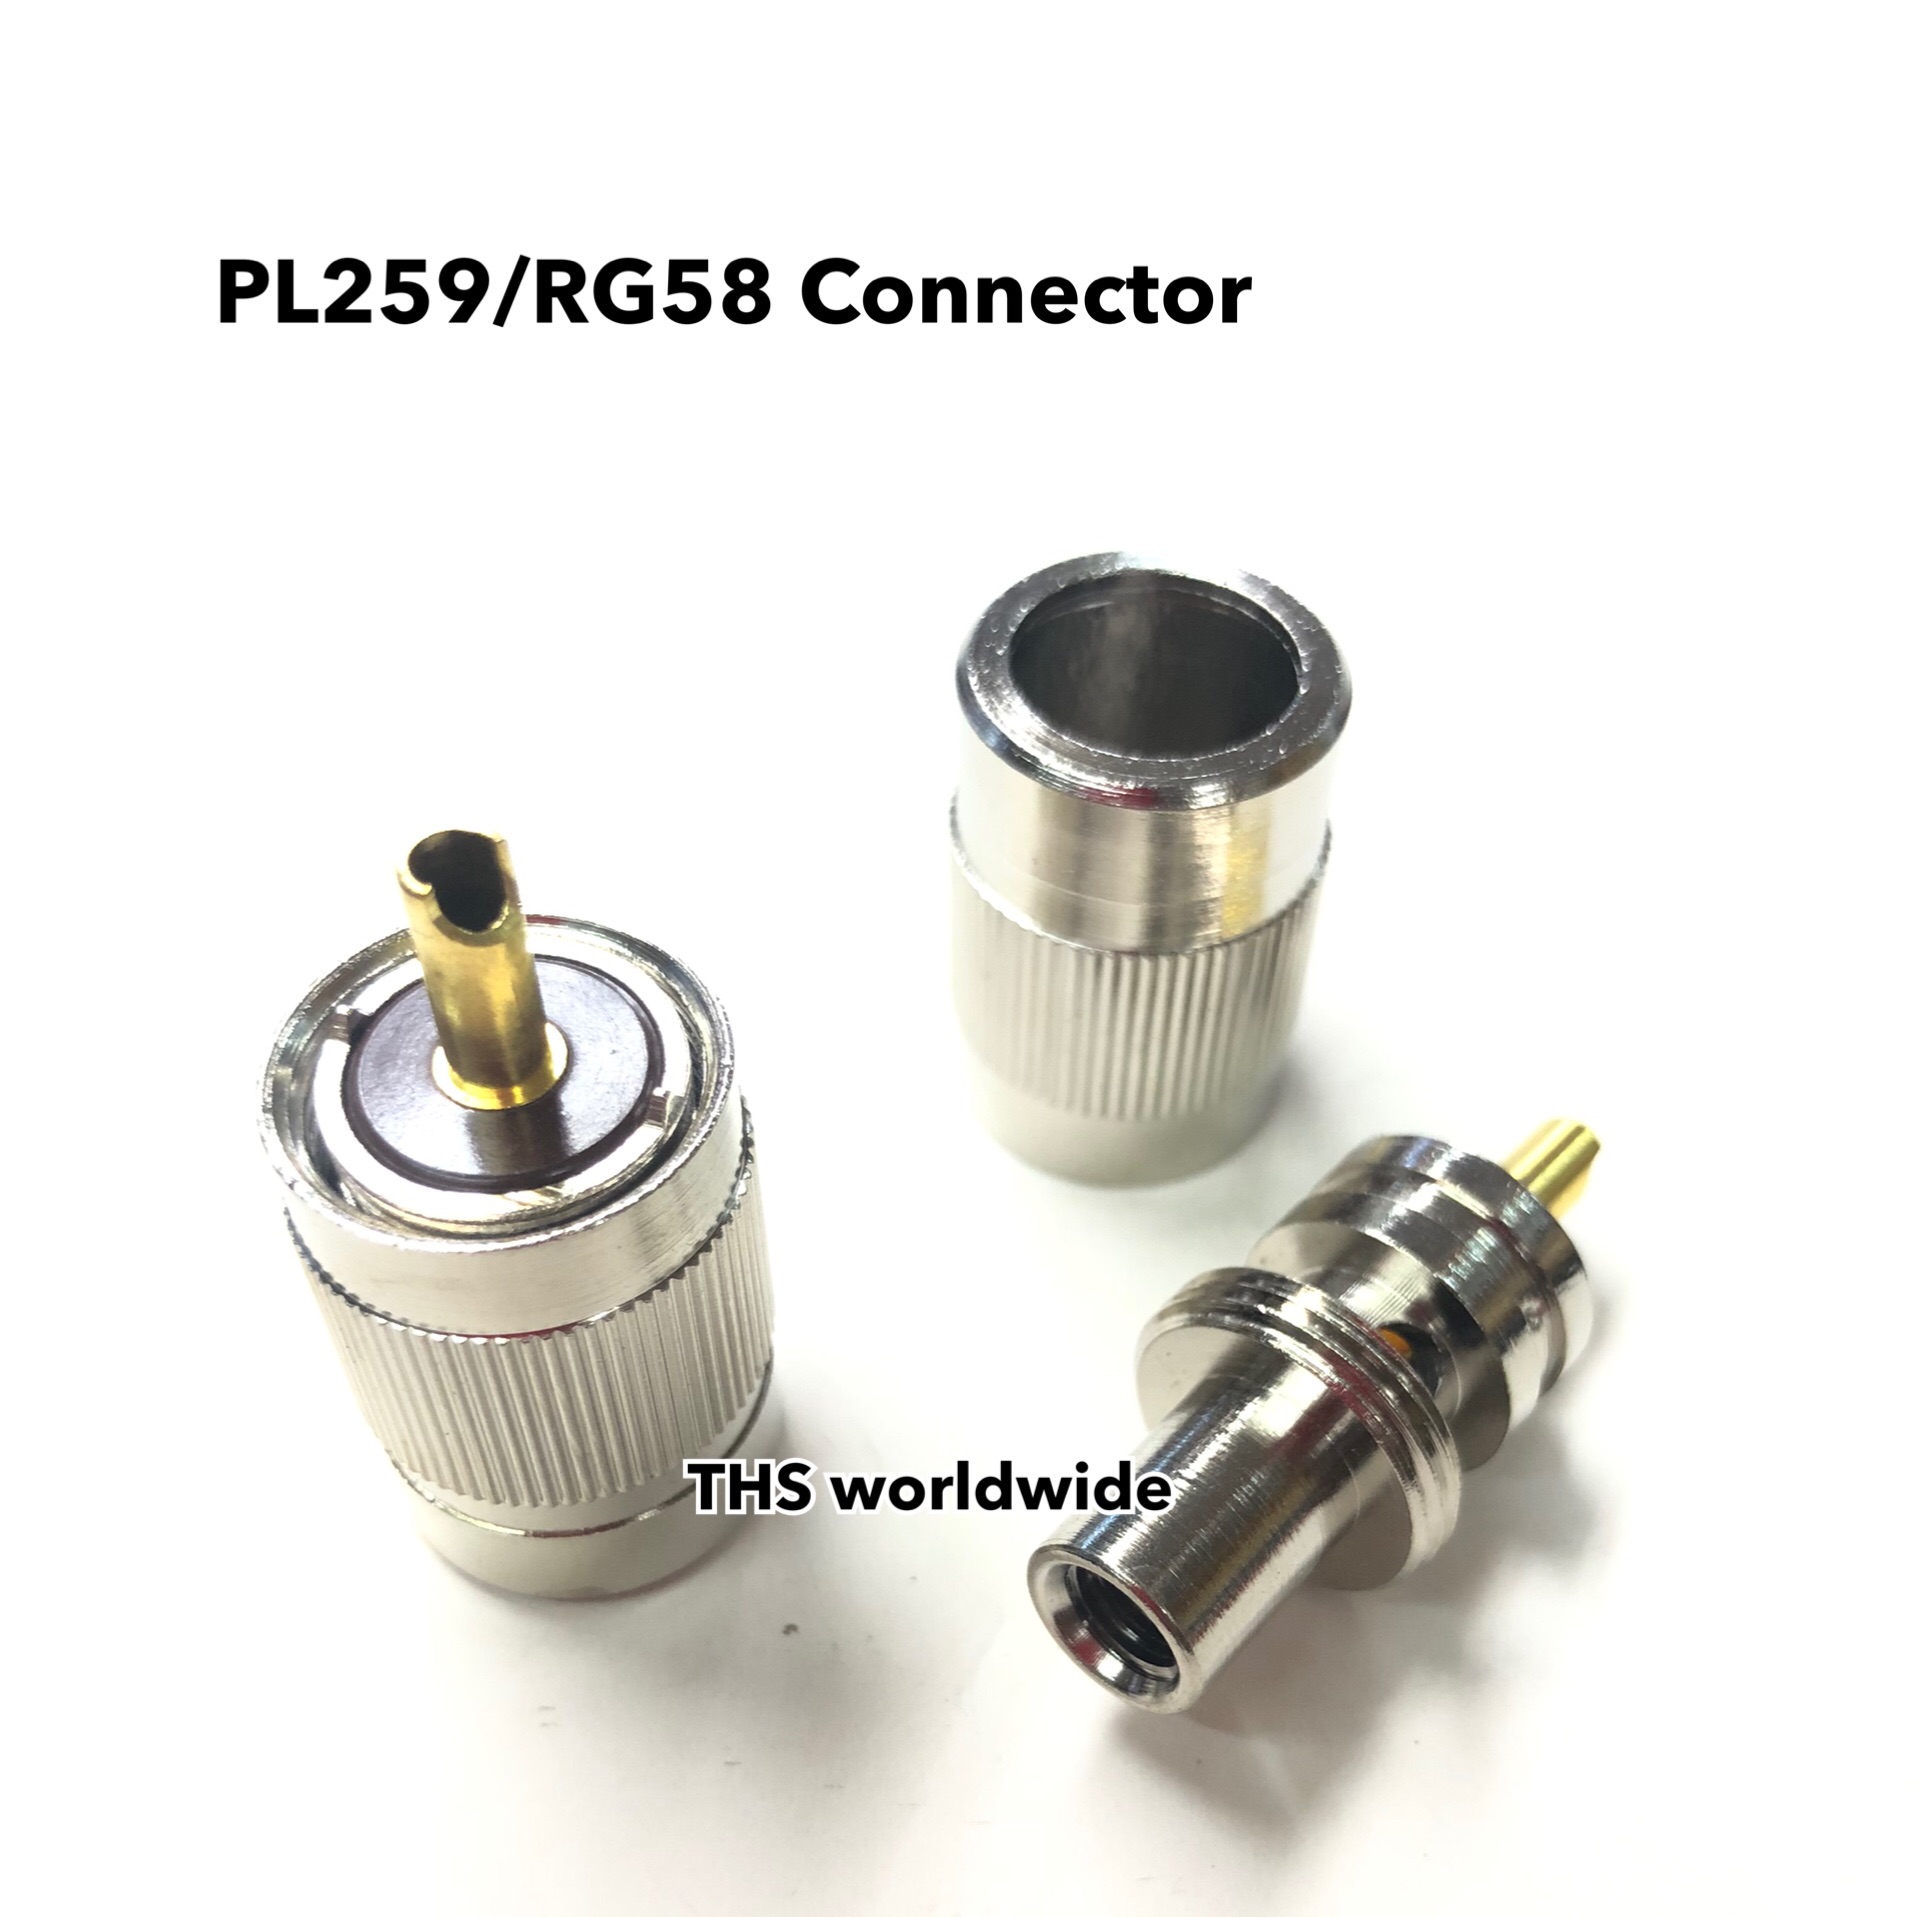 PL-259 / RG-58 ขั้วต่อสาย 1 ตัว นำสัญญาณ (อย่างดี) ขนาดสาย RG-58 ของดีมีคุณภาพ...